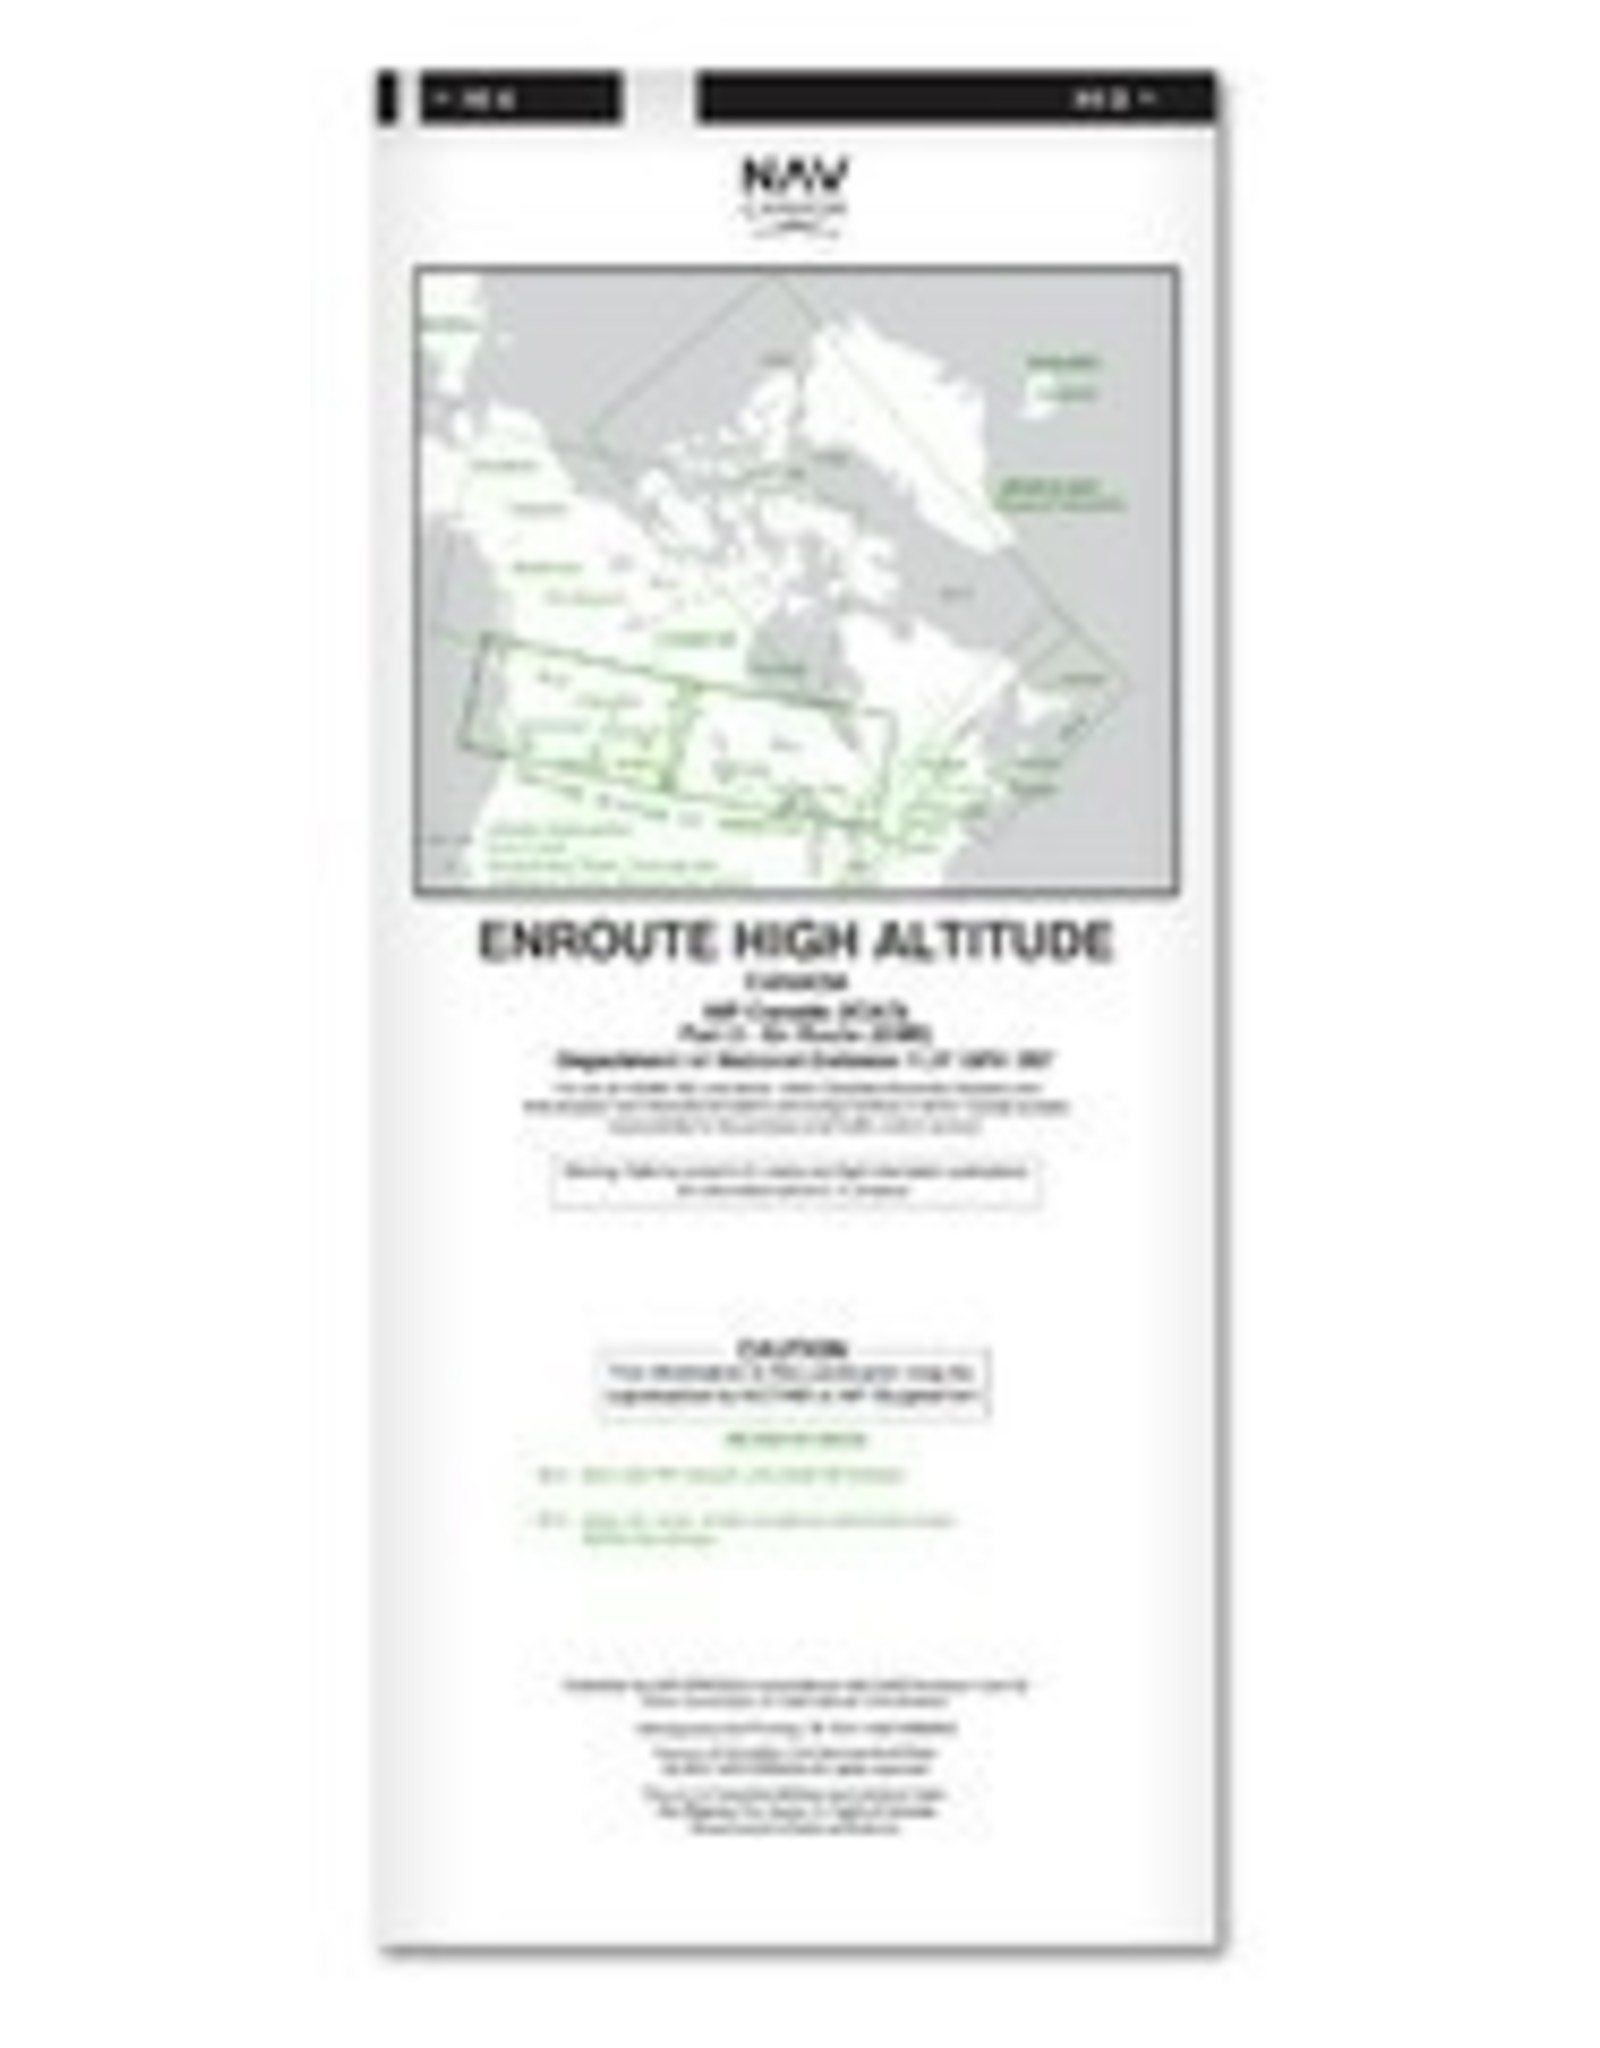 HI 3/4 Enroute High Altitude - Jul 14, 22 to Sep 8, 22